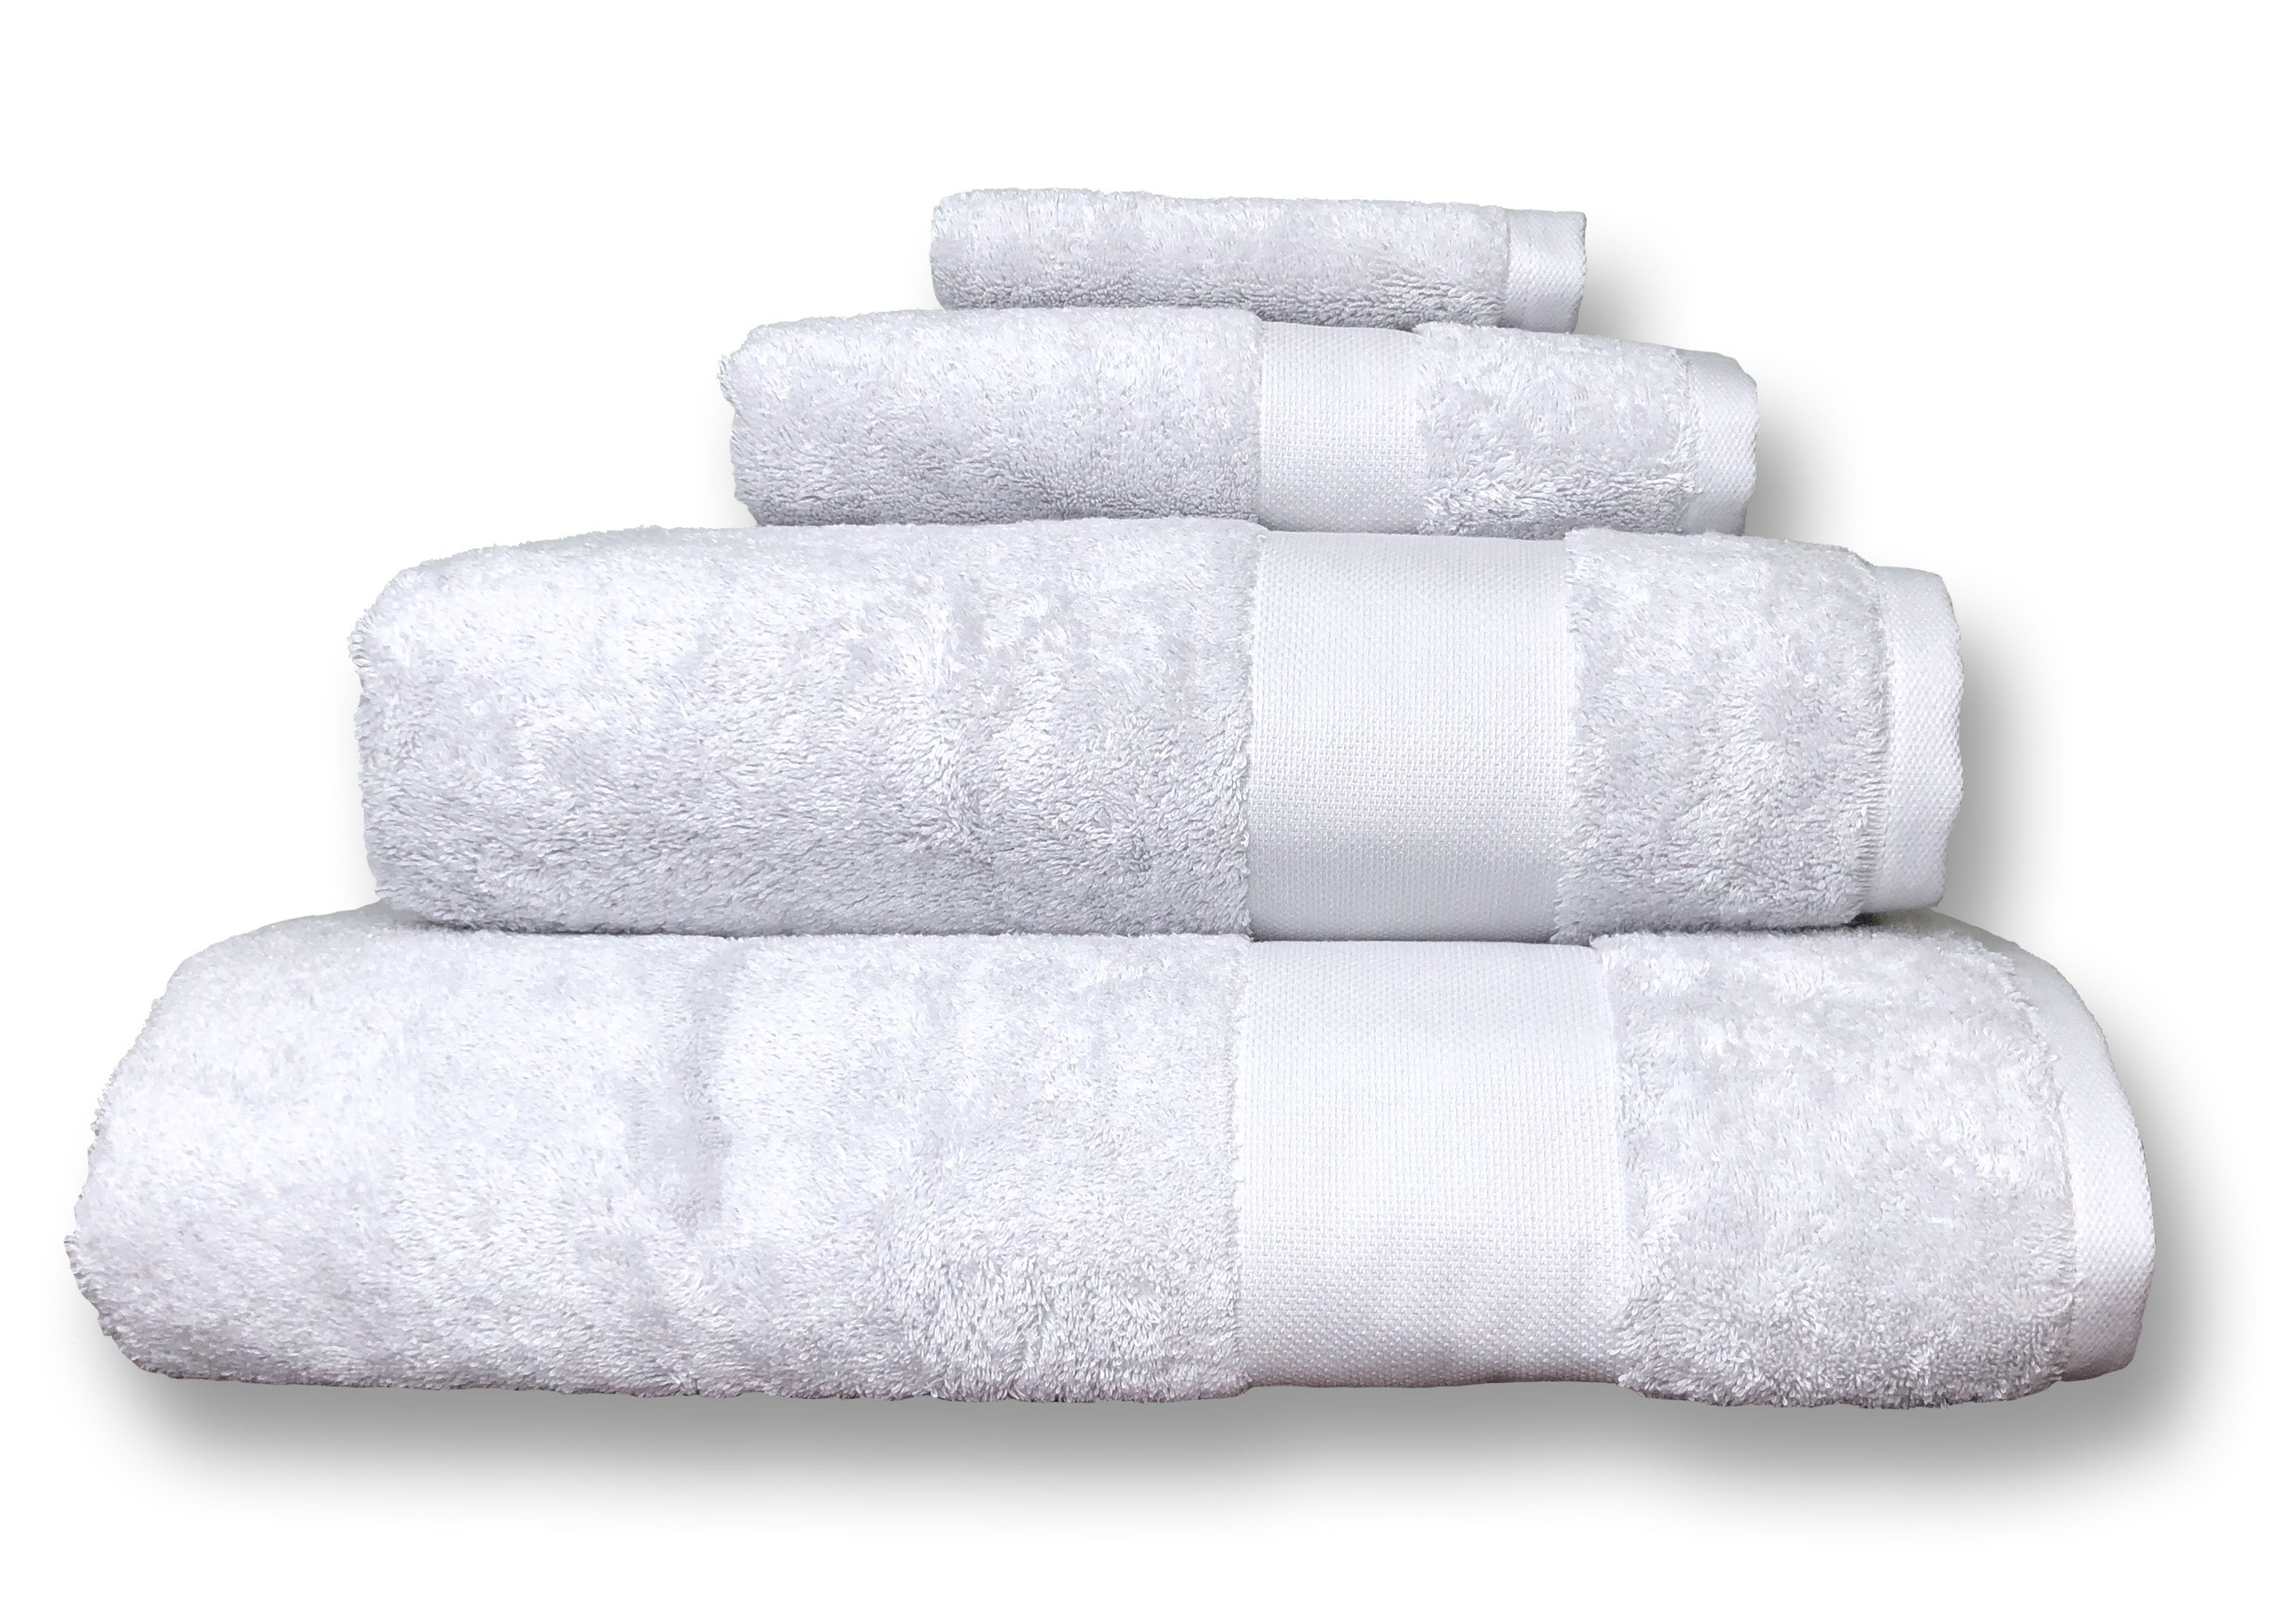 Alexandria Egyptian Cotton Towels